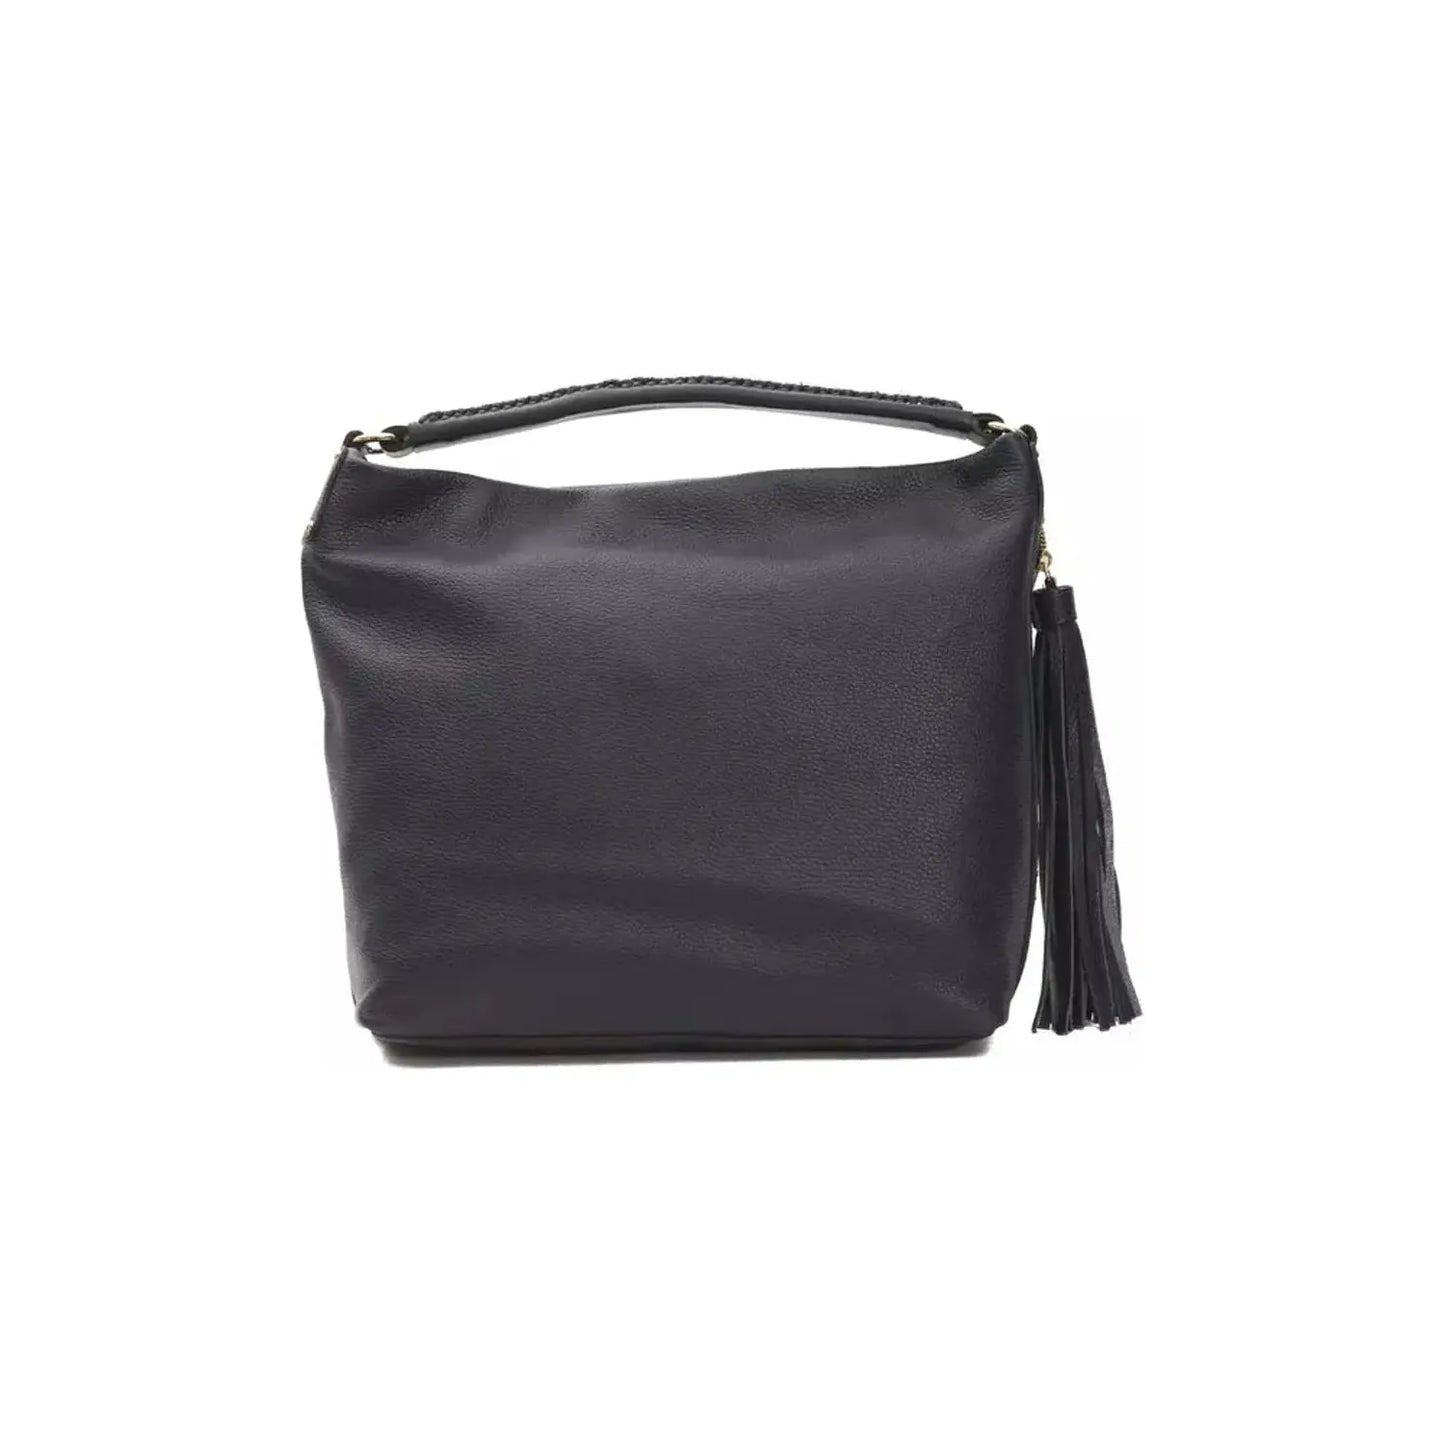 Pompei Donatella Chic Gray Leather Shoulder Bag with Logo Detail WOMAN SHOULDER BAGS gray-leather-shoulder-bag-3 stock_product_image_5801_835820547-22-e726dae1-53a.webp